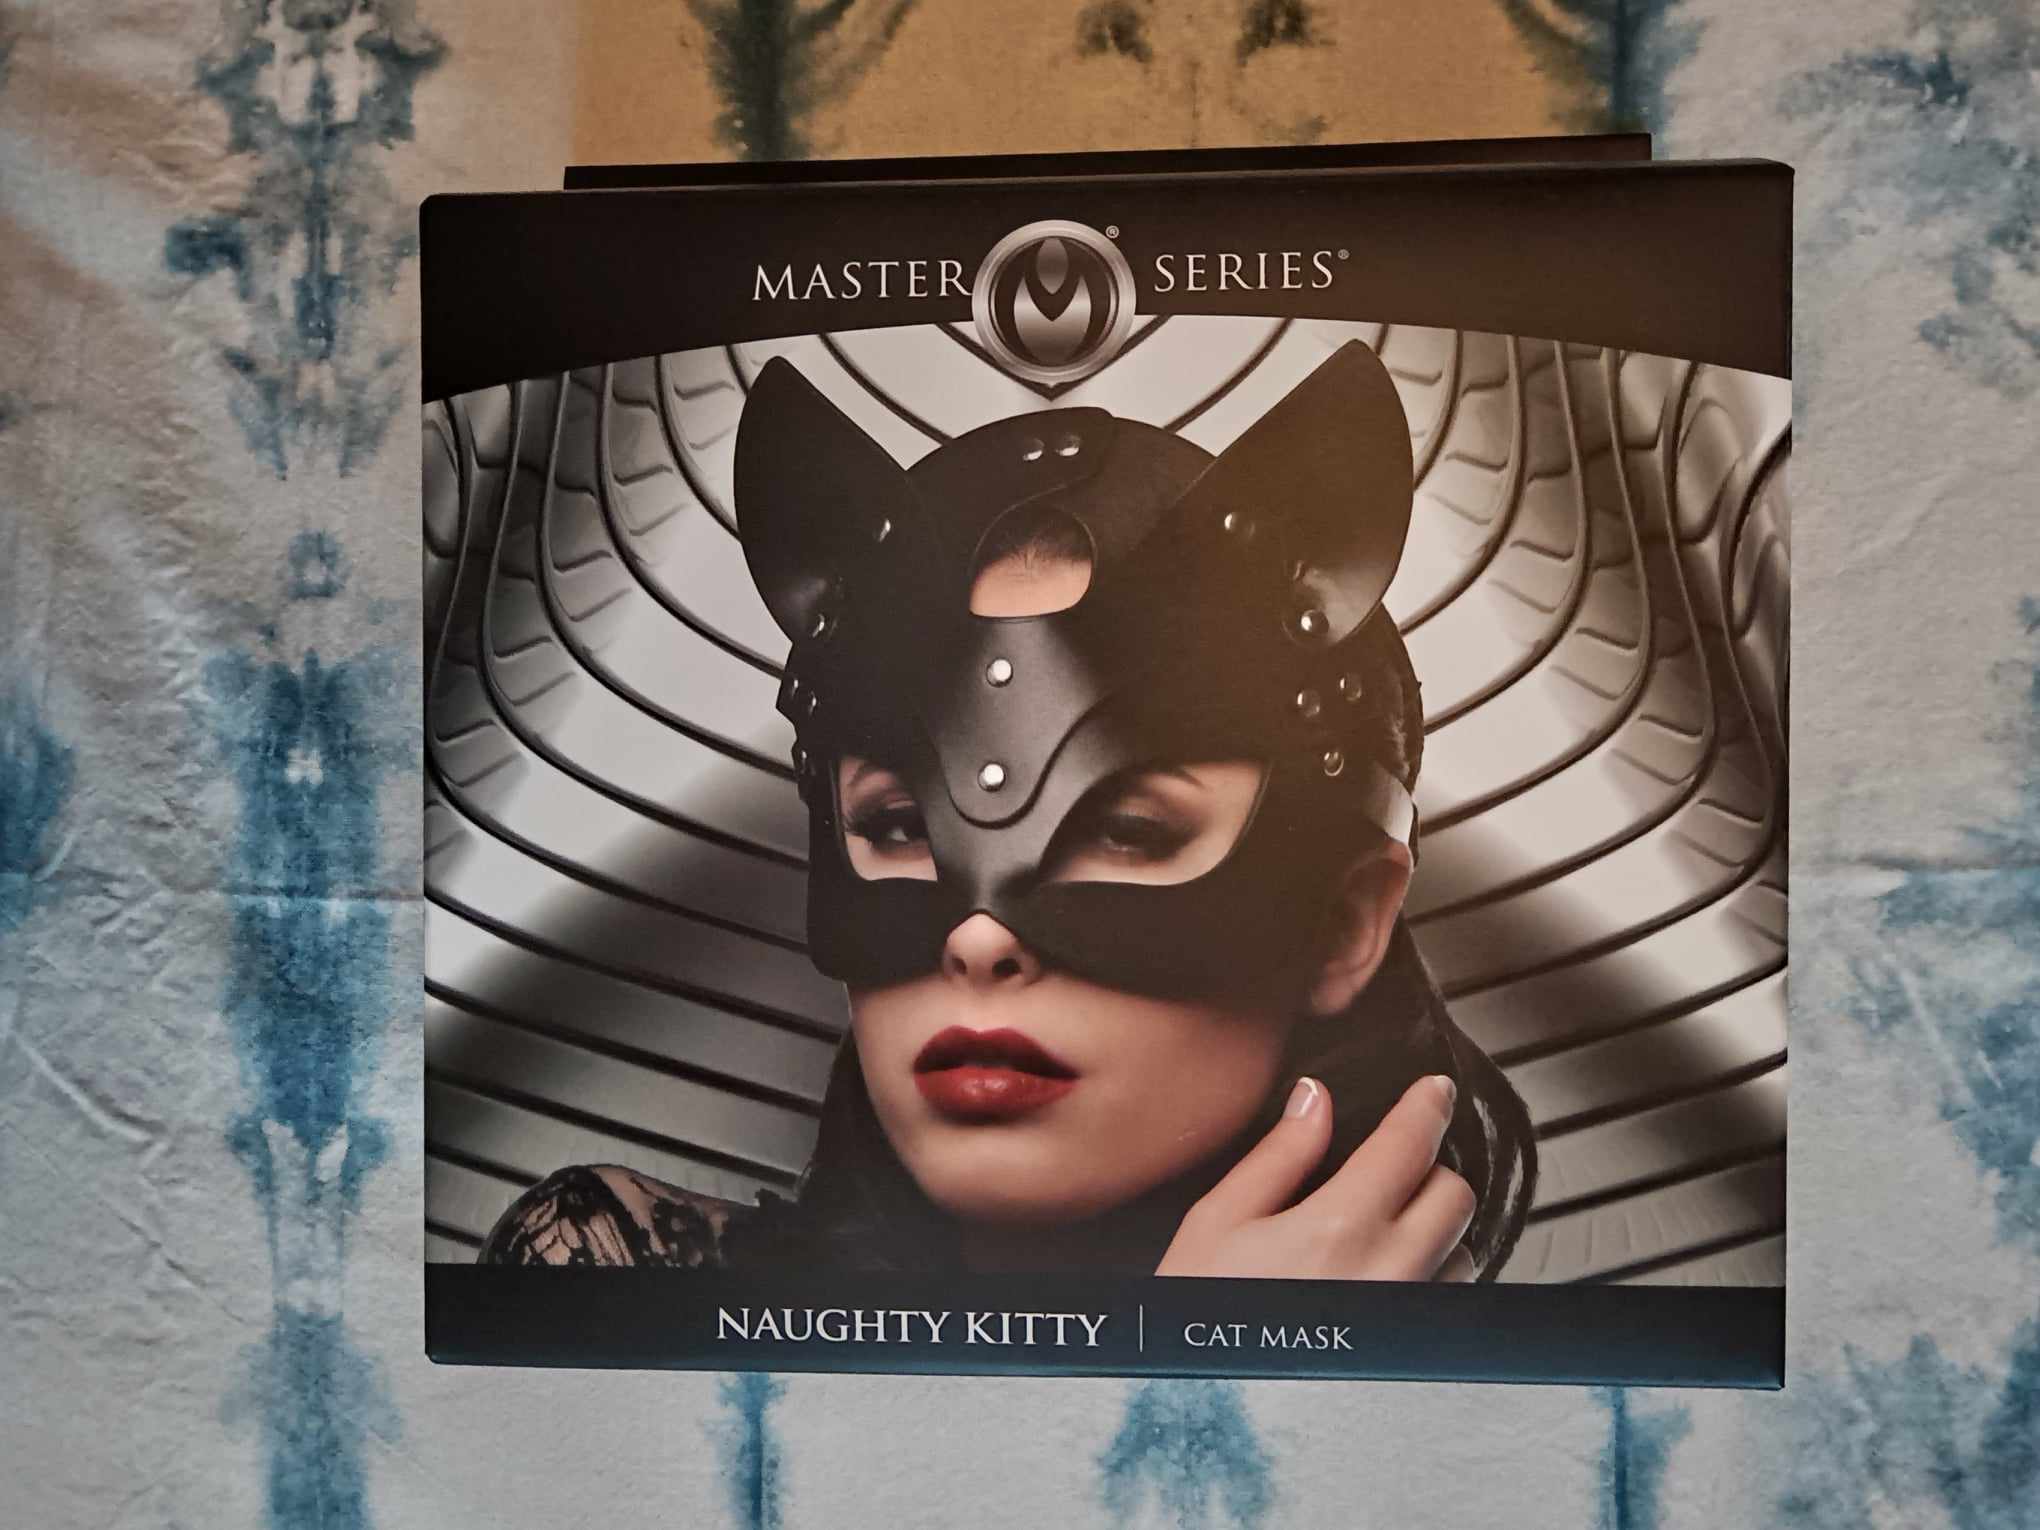  Master Series Naughty Kitty Cat Mask Assessing the Packaging of the  Master Series Naughty Kitty Cat Mask